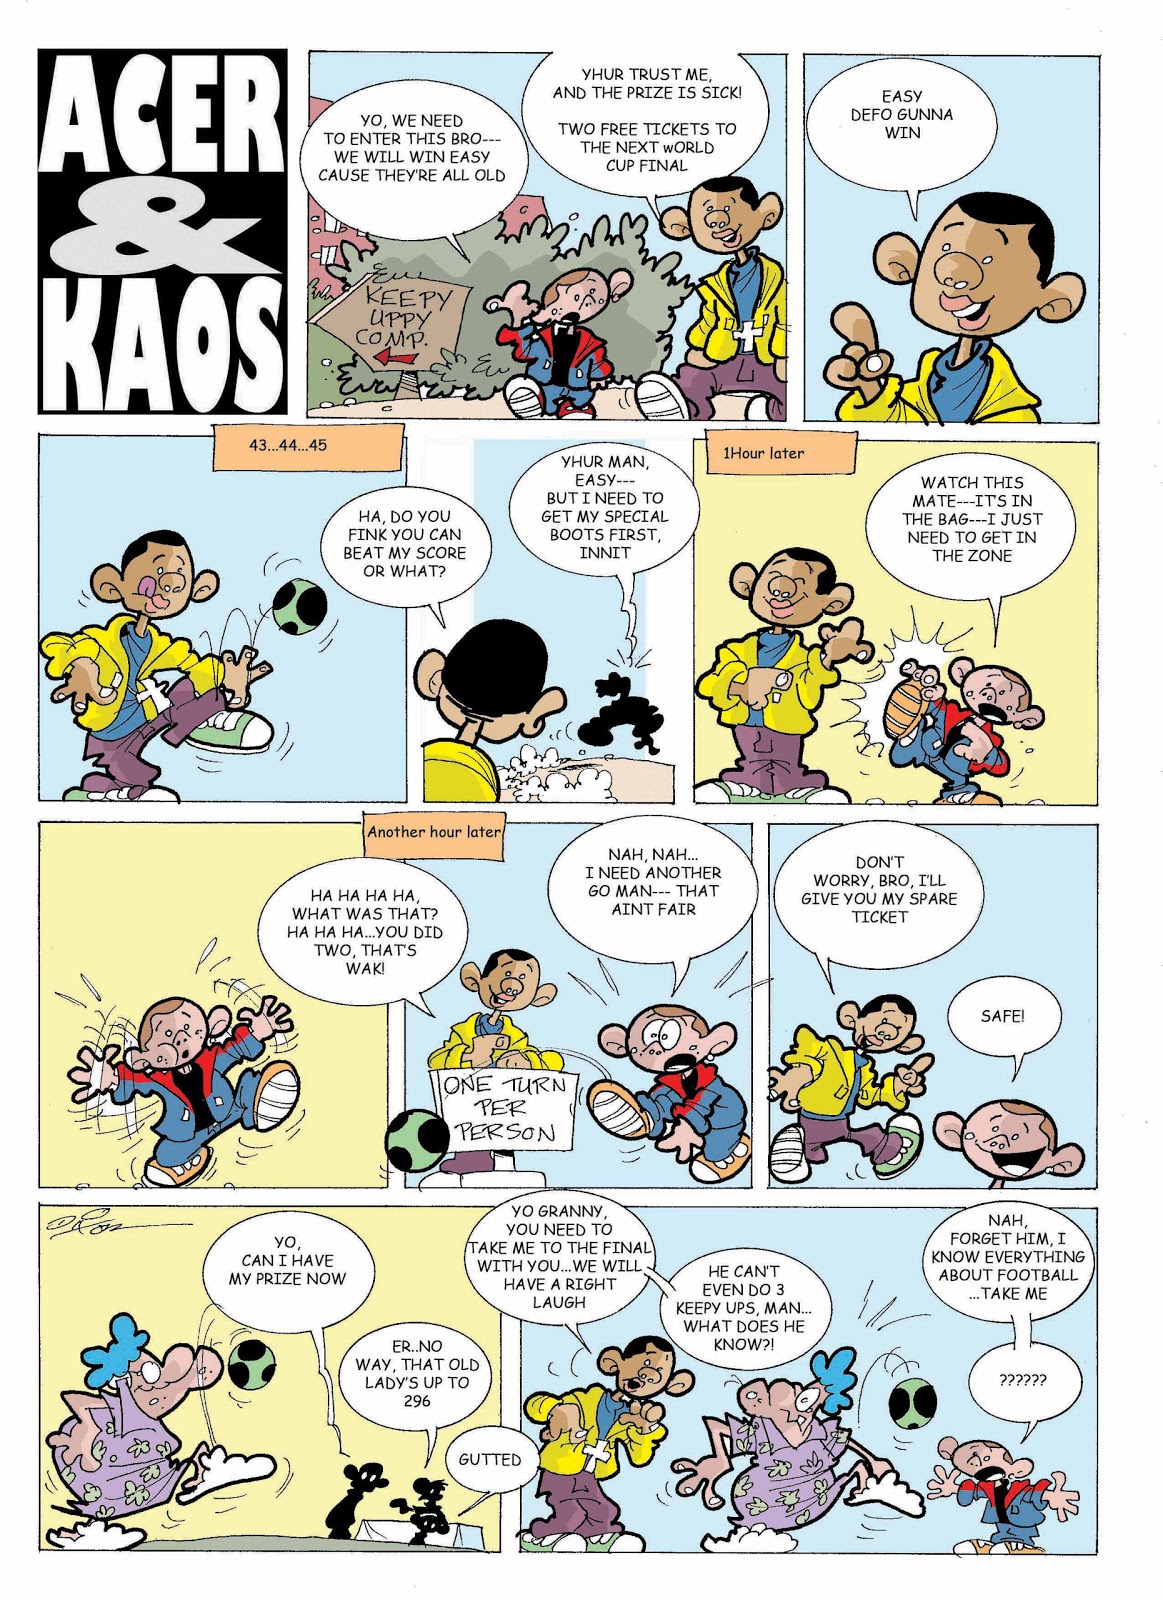 Cartoonist Diary: Acer and Kaos- New Comic strip idea